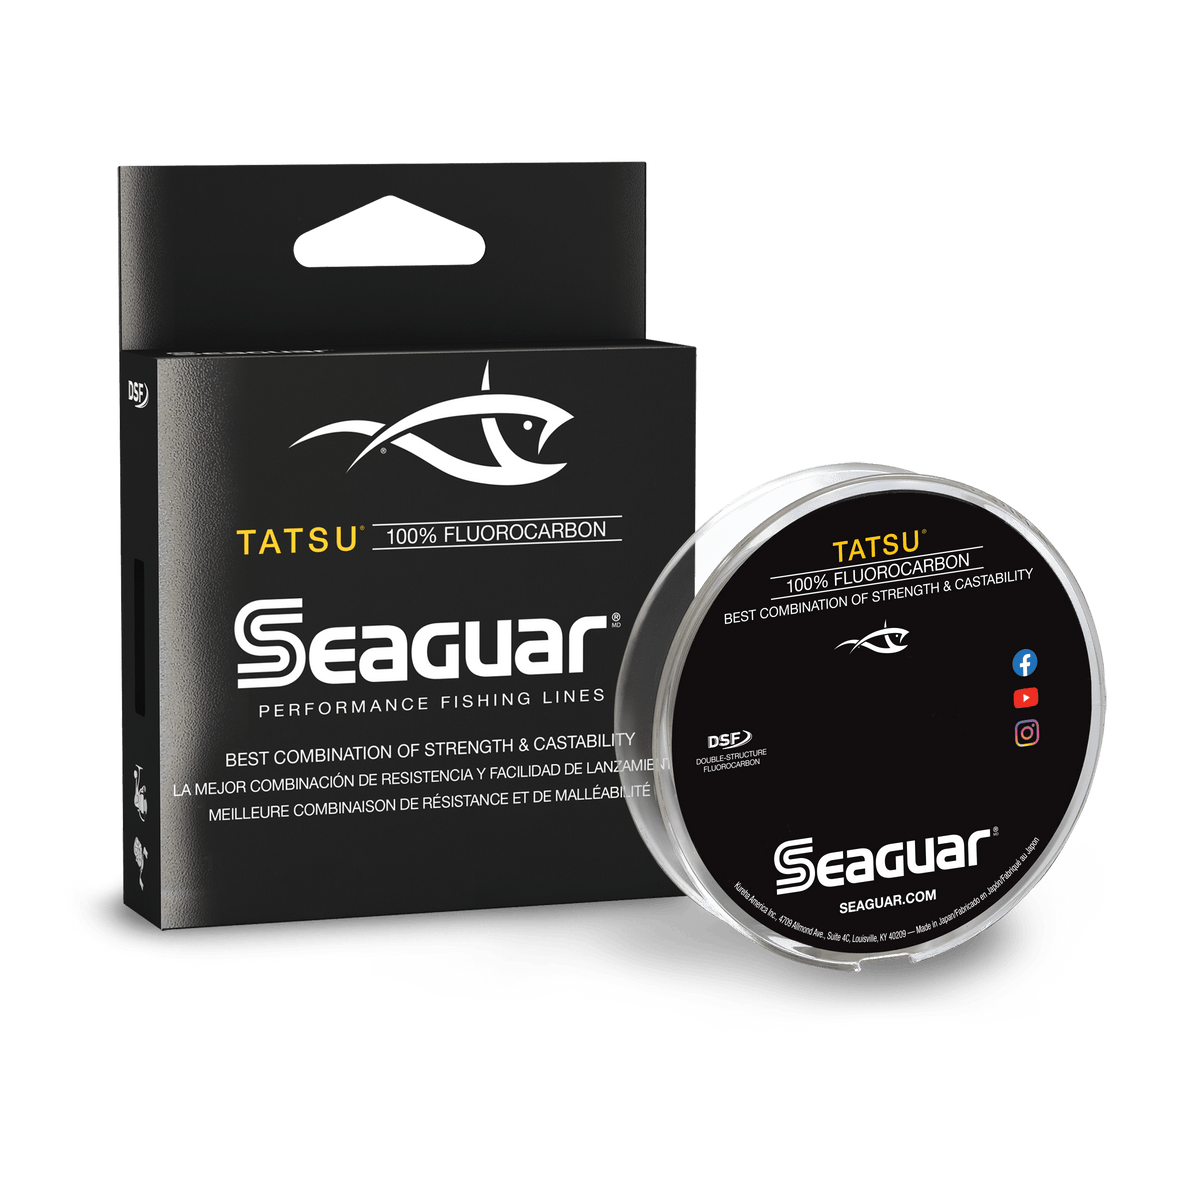 Seaguar STS Salmon Fluorocarbon 100yds